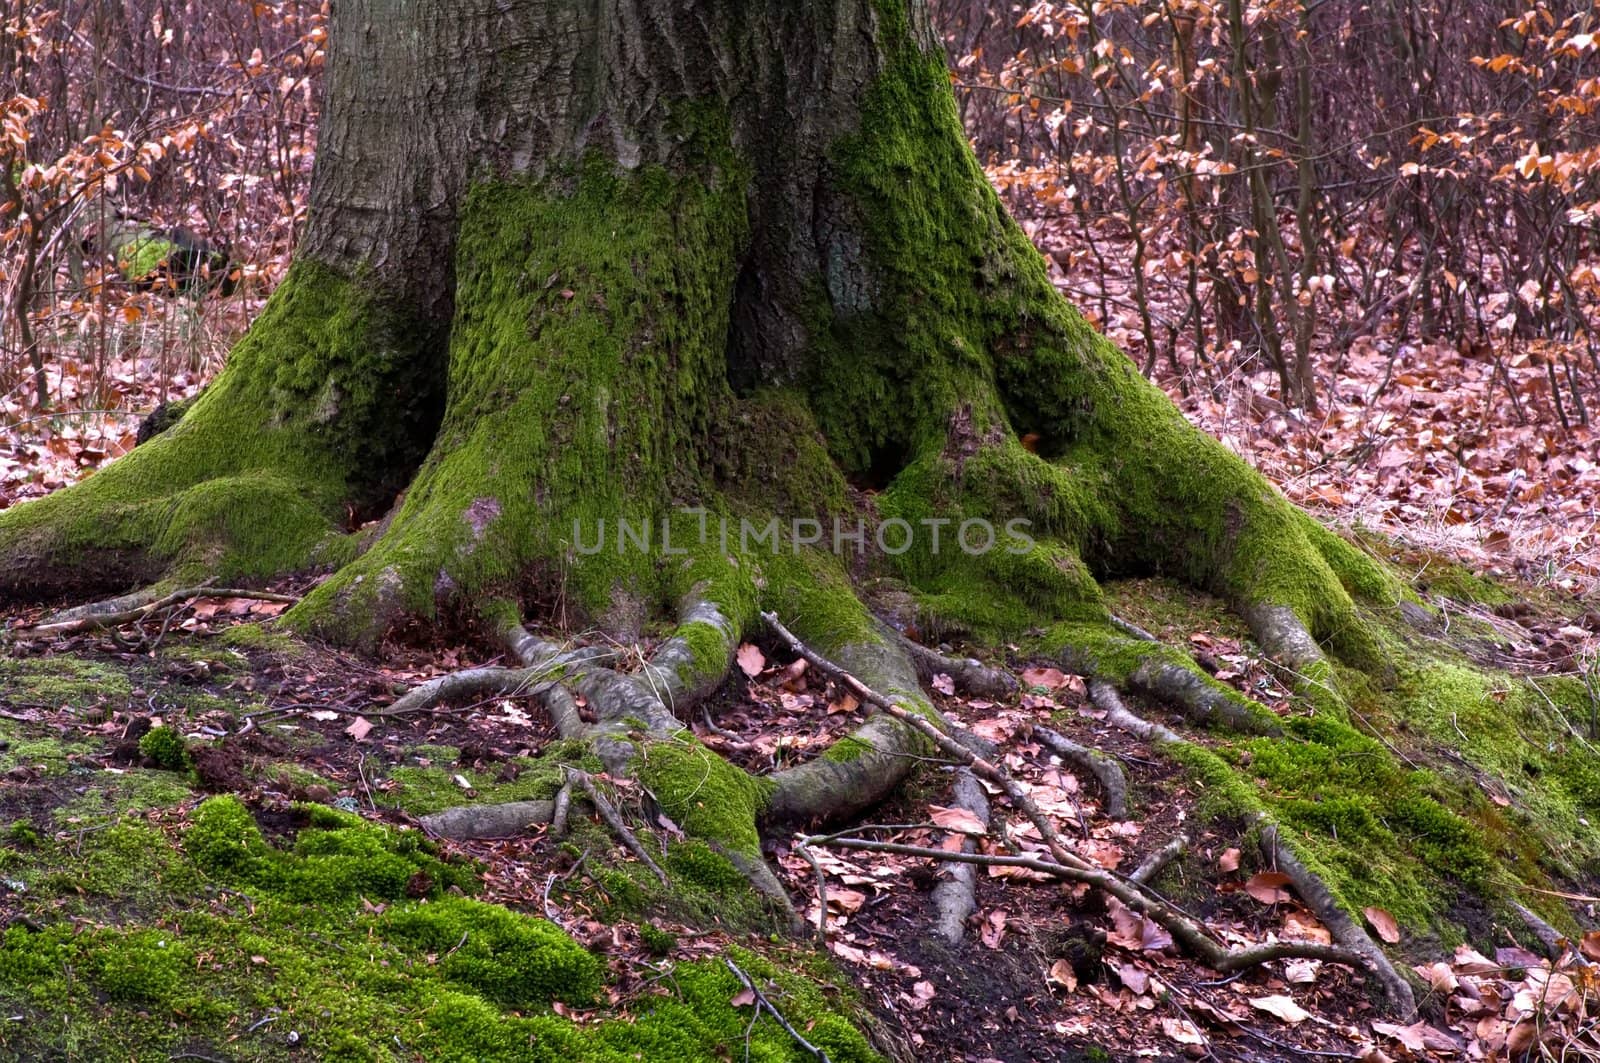 Tree roots by baggiovara